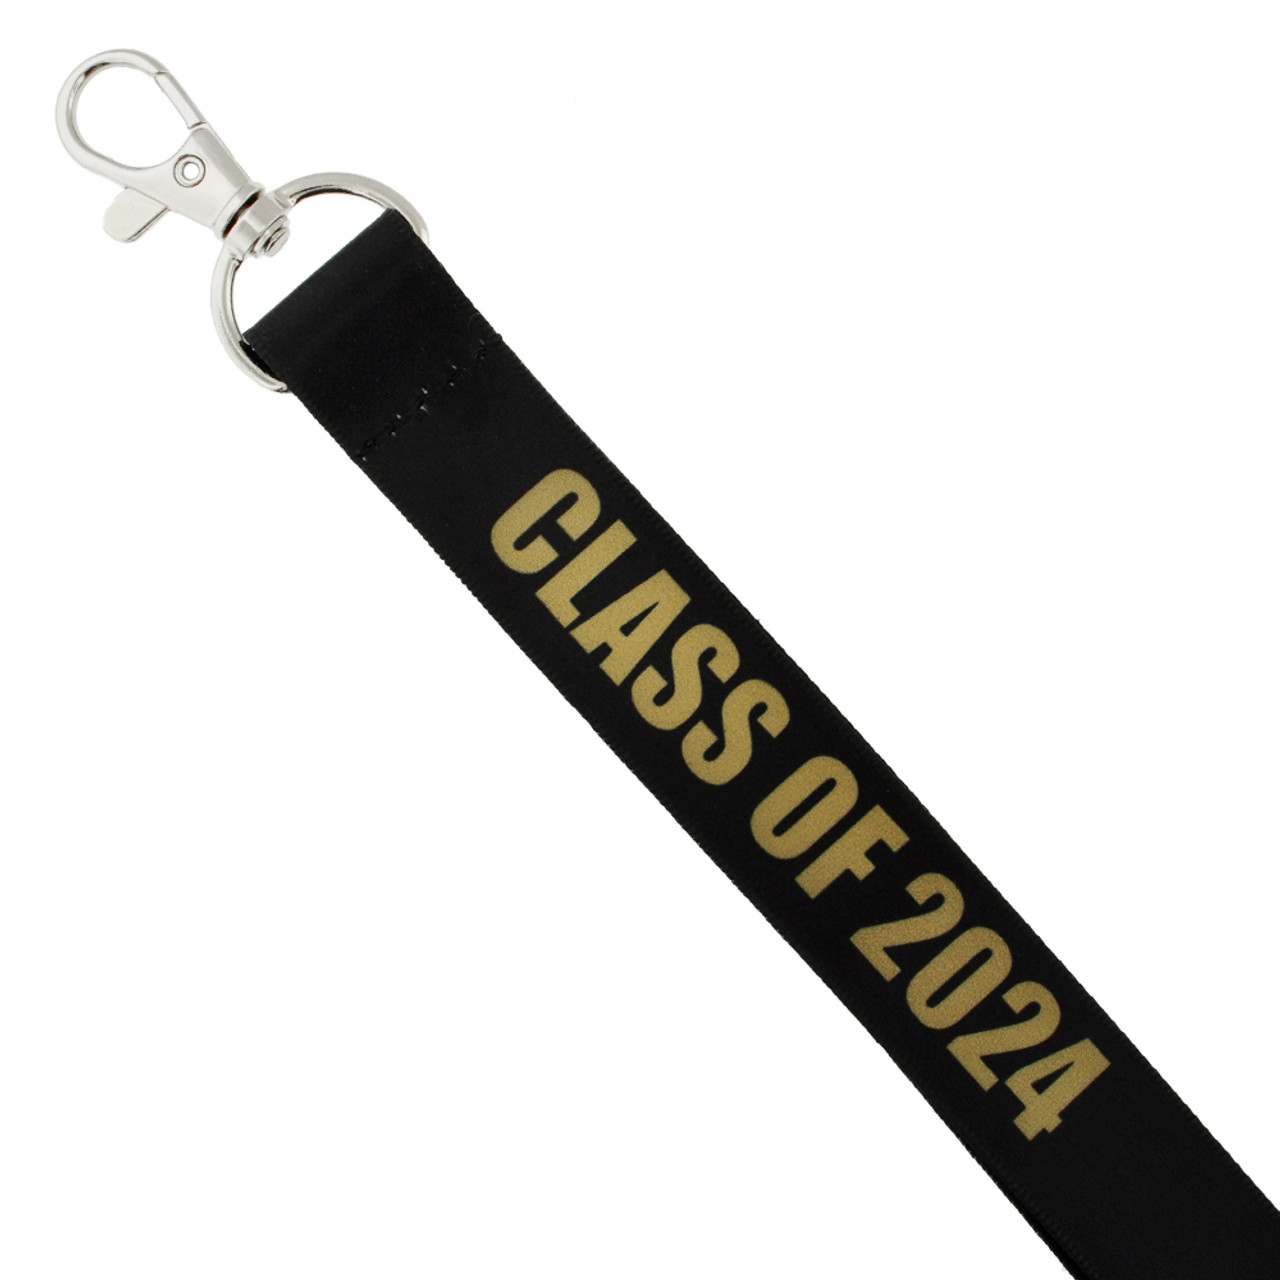 Class of 2024 Graduation Cap Pin | Multi Color | School Pins by PinMart